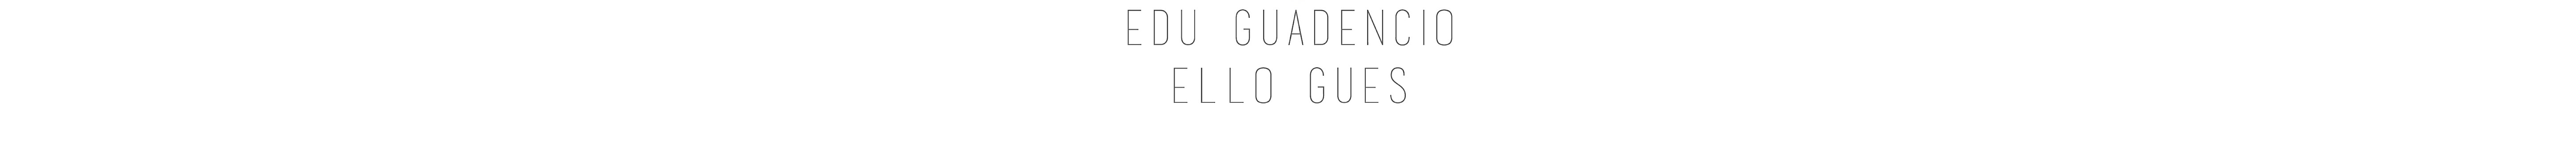 ' Edu Guadencio | Ello Gues ''s profile banner